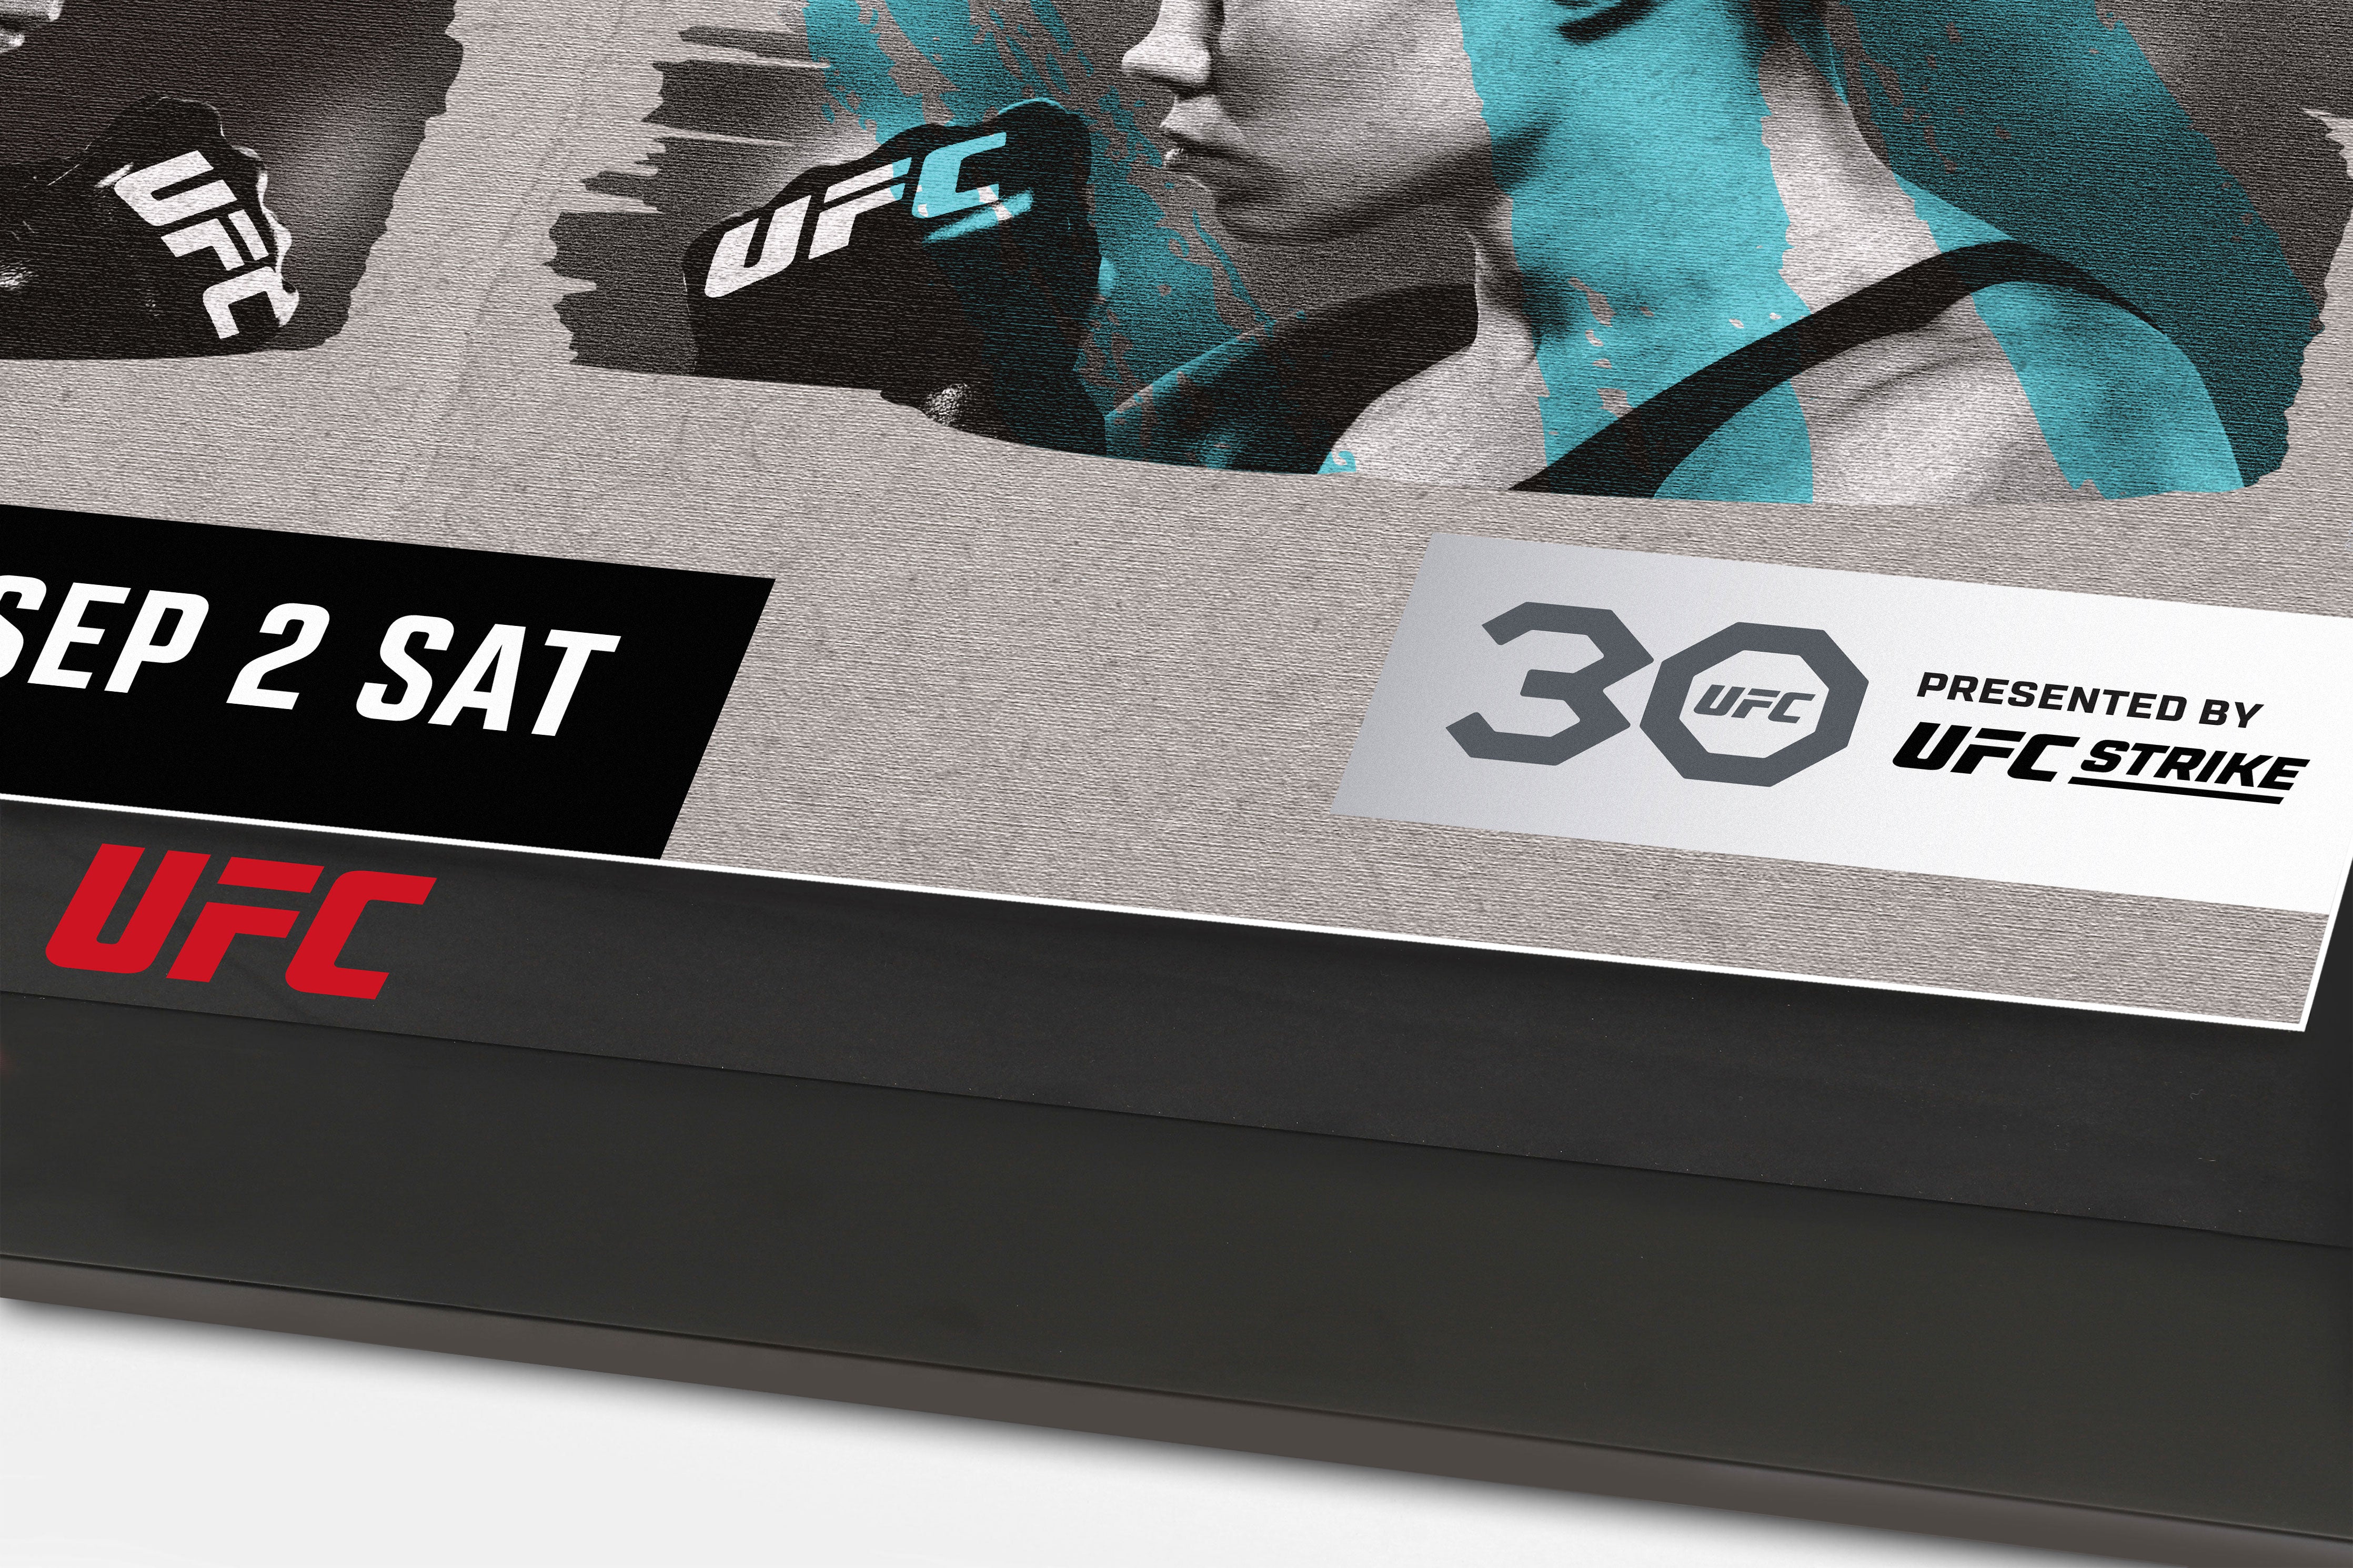 UFC Fight Night: Gane vs Spivac Autographed Event Poster